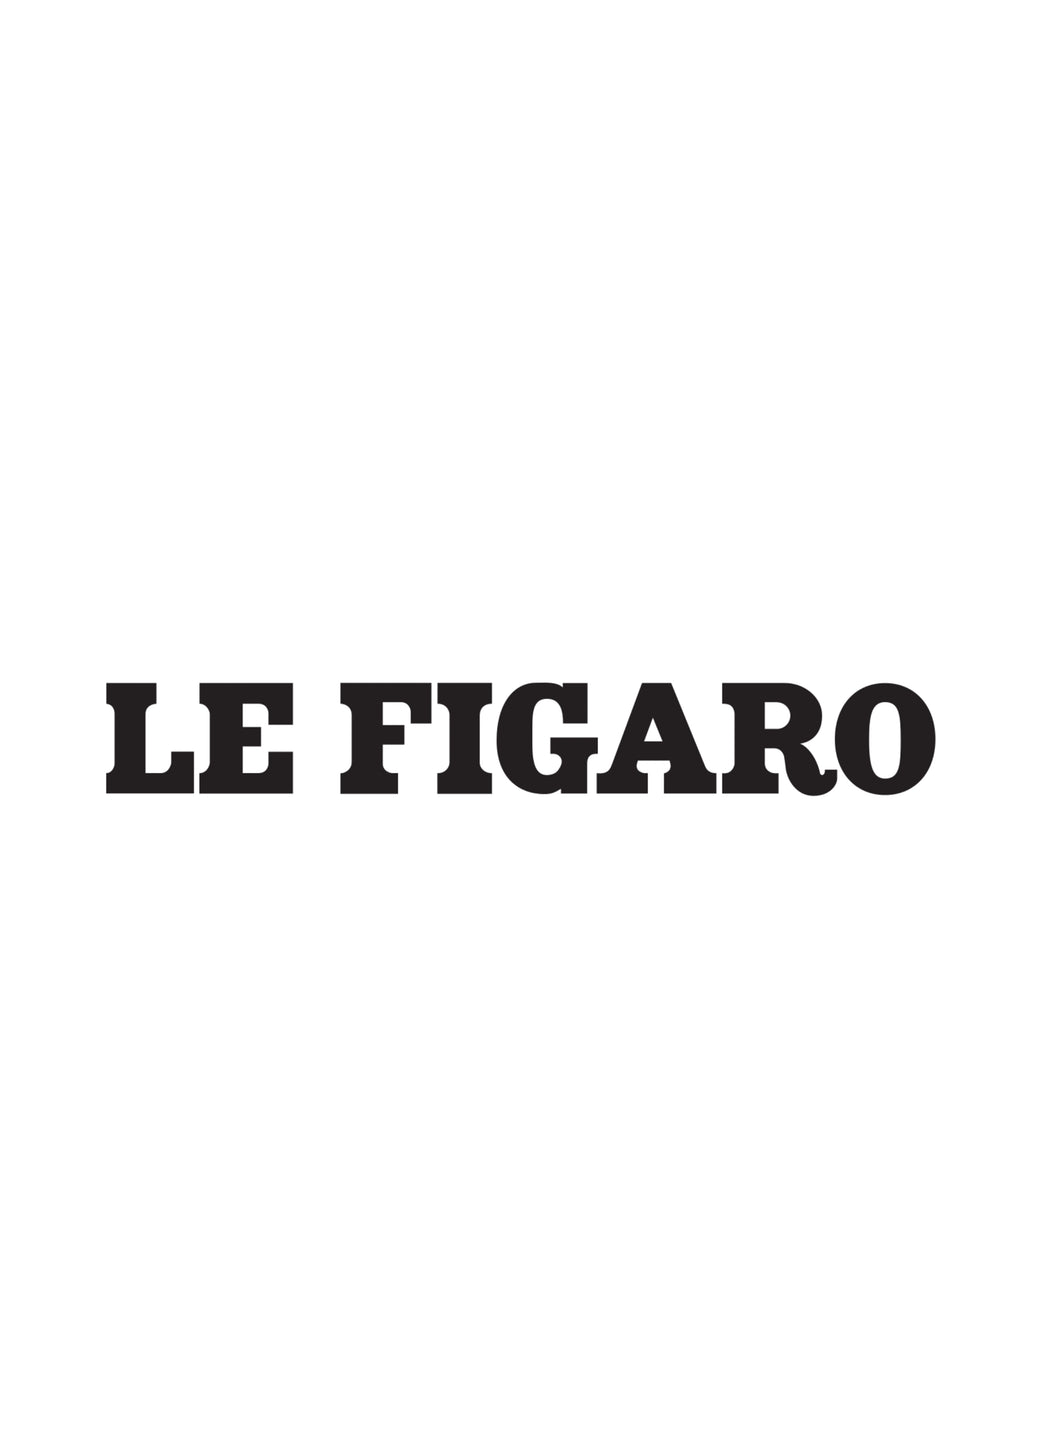 Le Figaro - Online